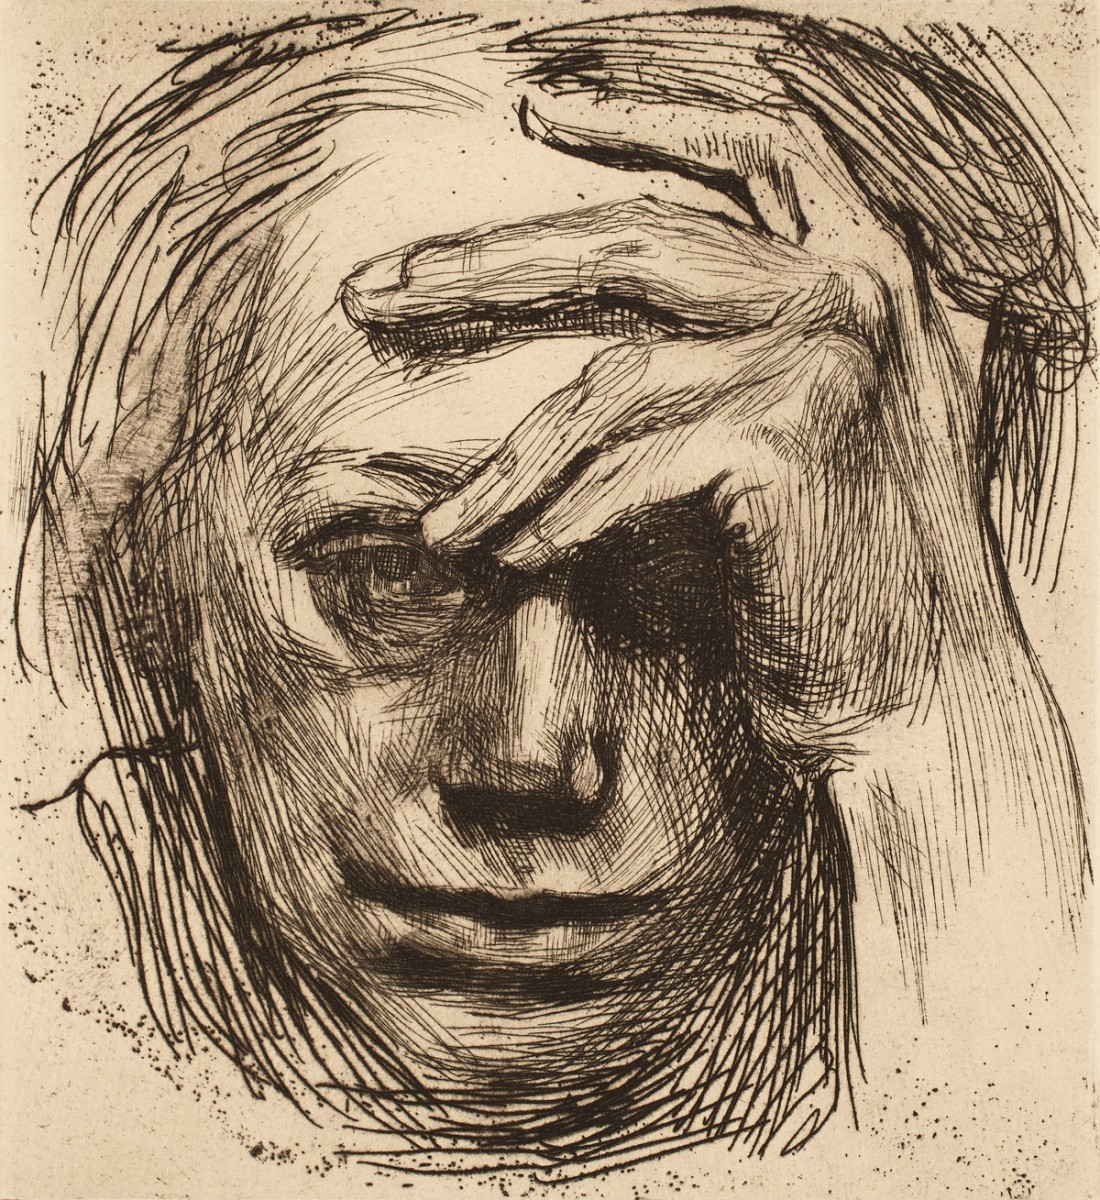 kollwitz Self-portrait with hand to forehead